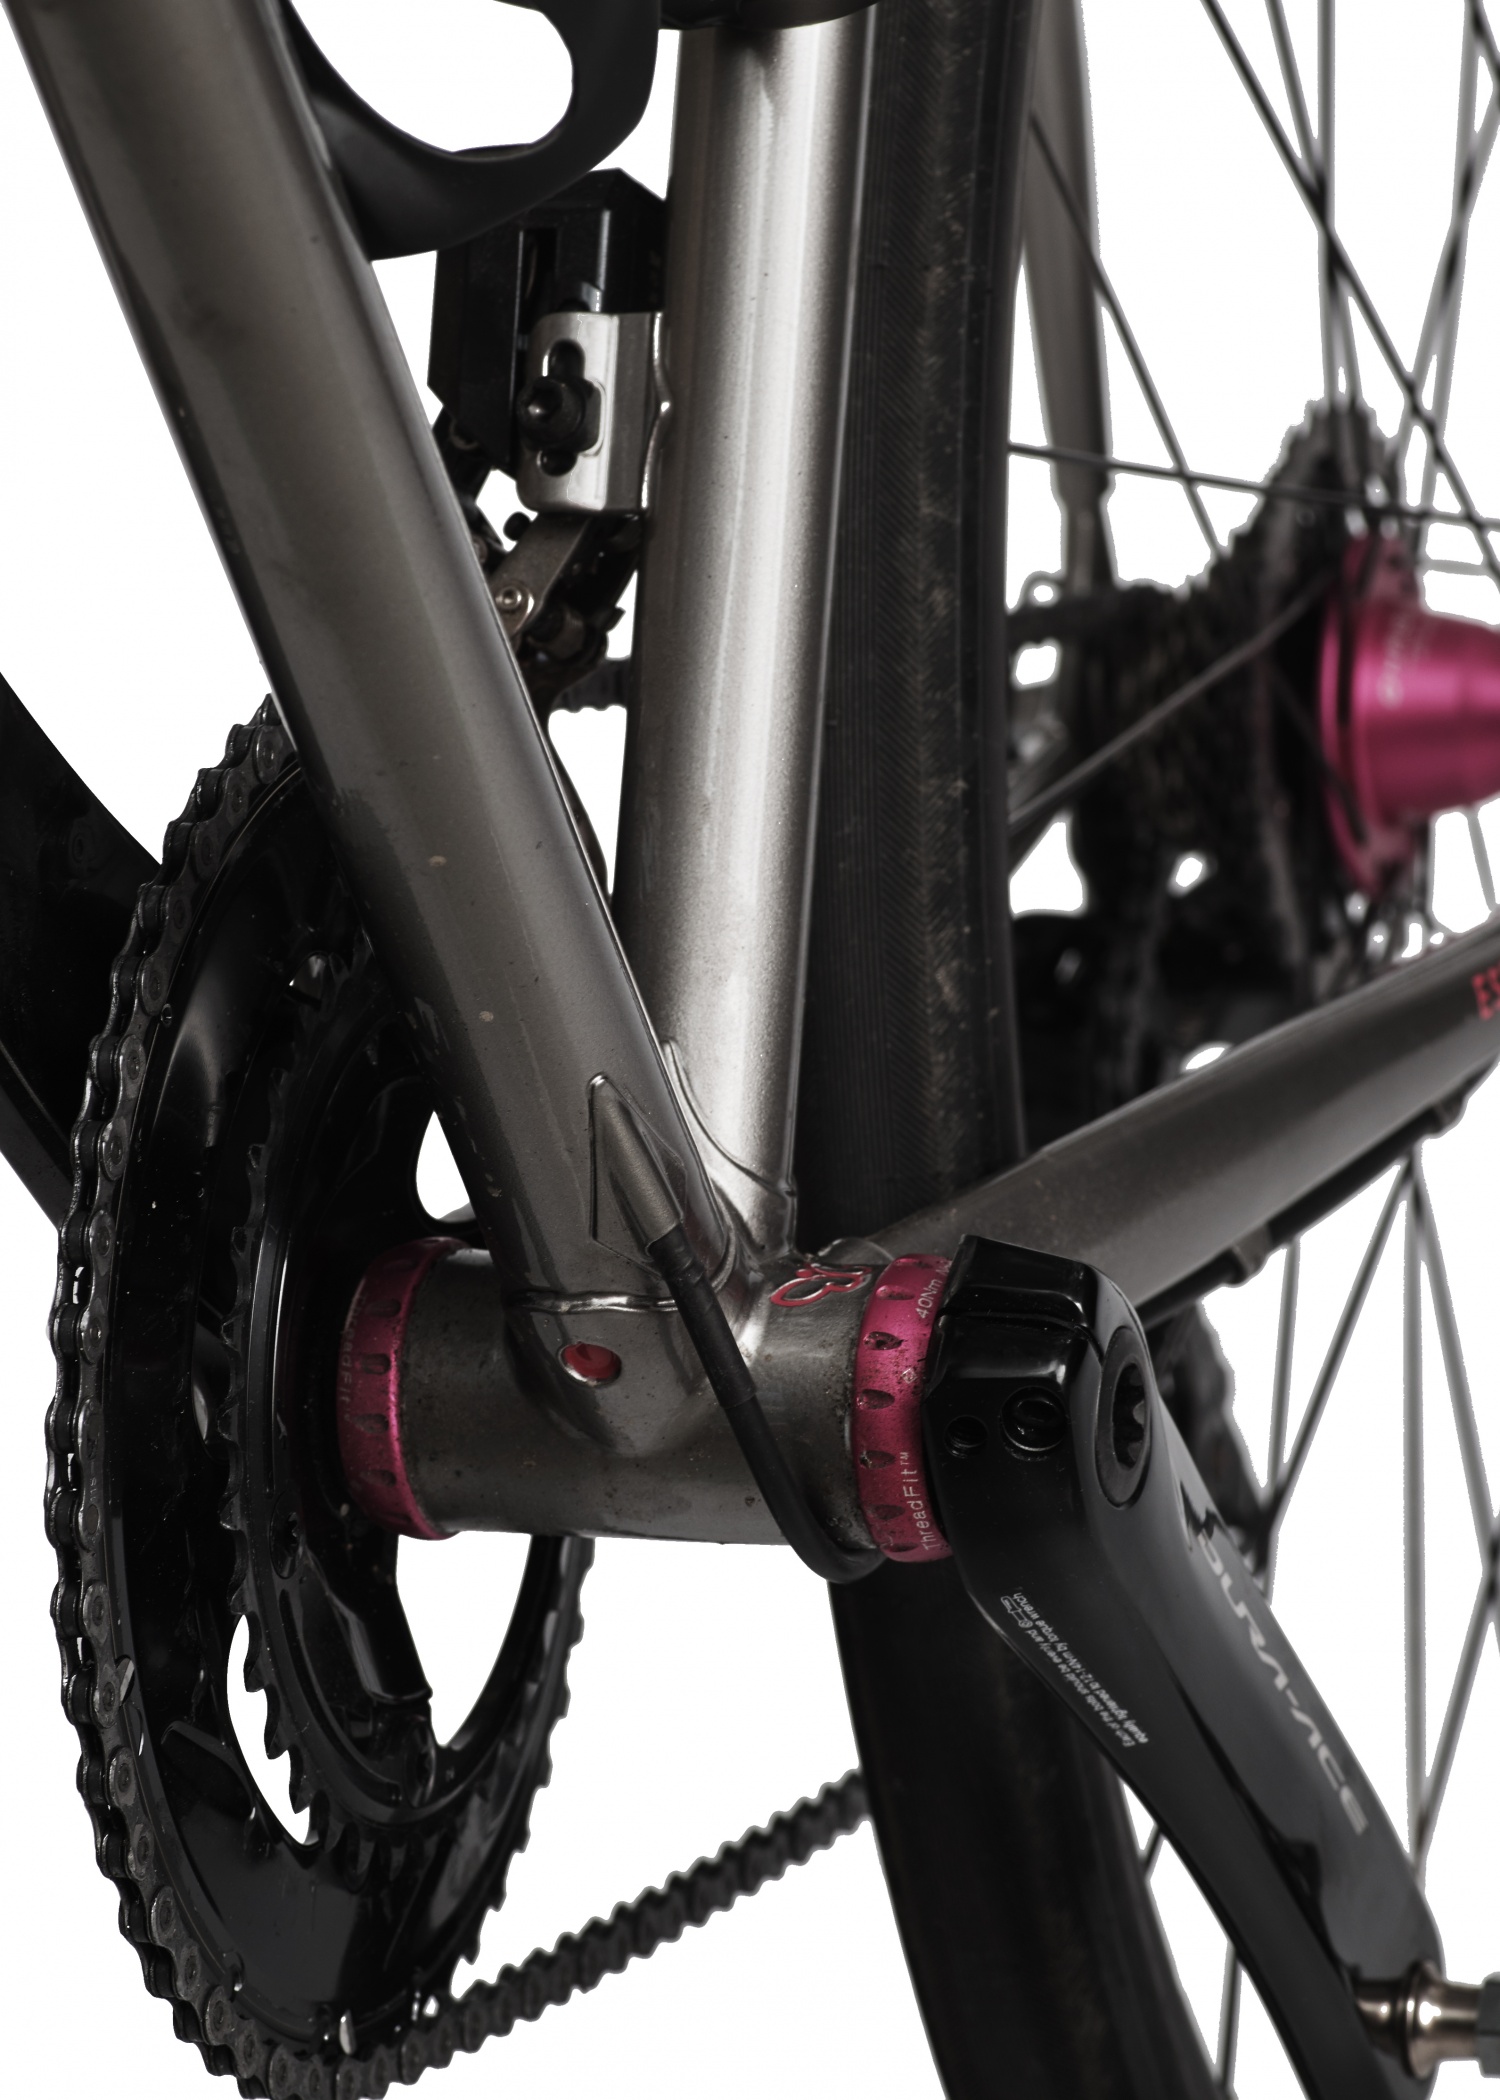 Mariposa Feature: All-Road Dura-Ace Di2 Hydraulic Bike - Mariposa